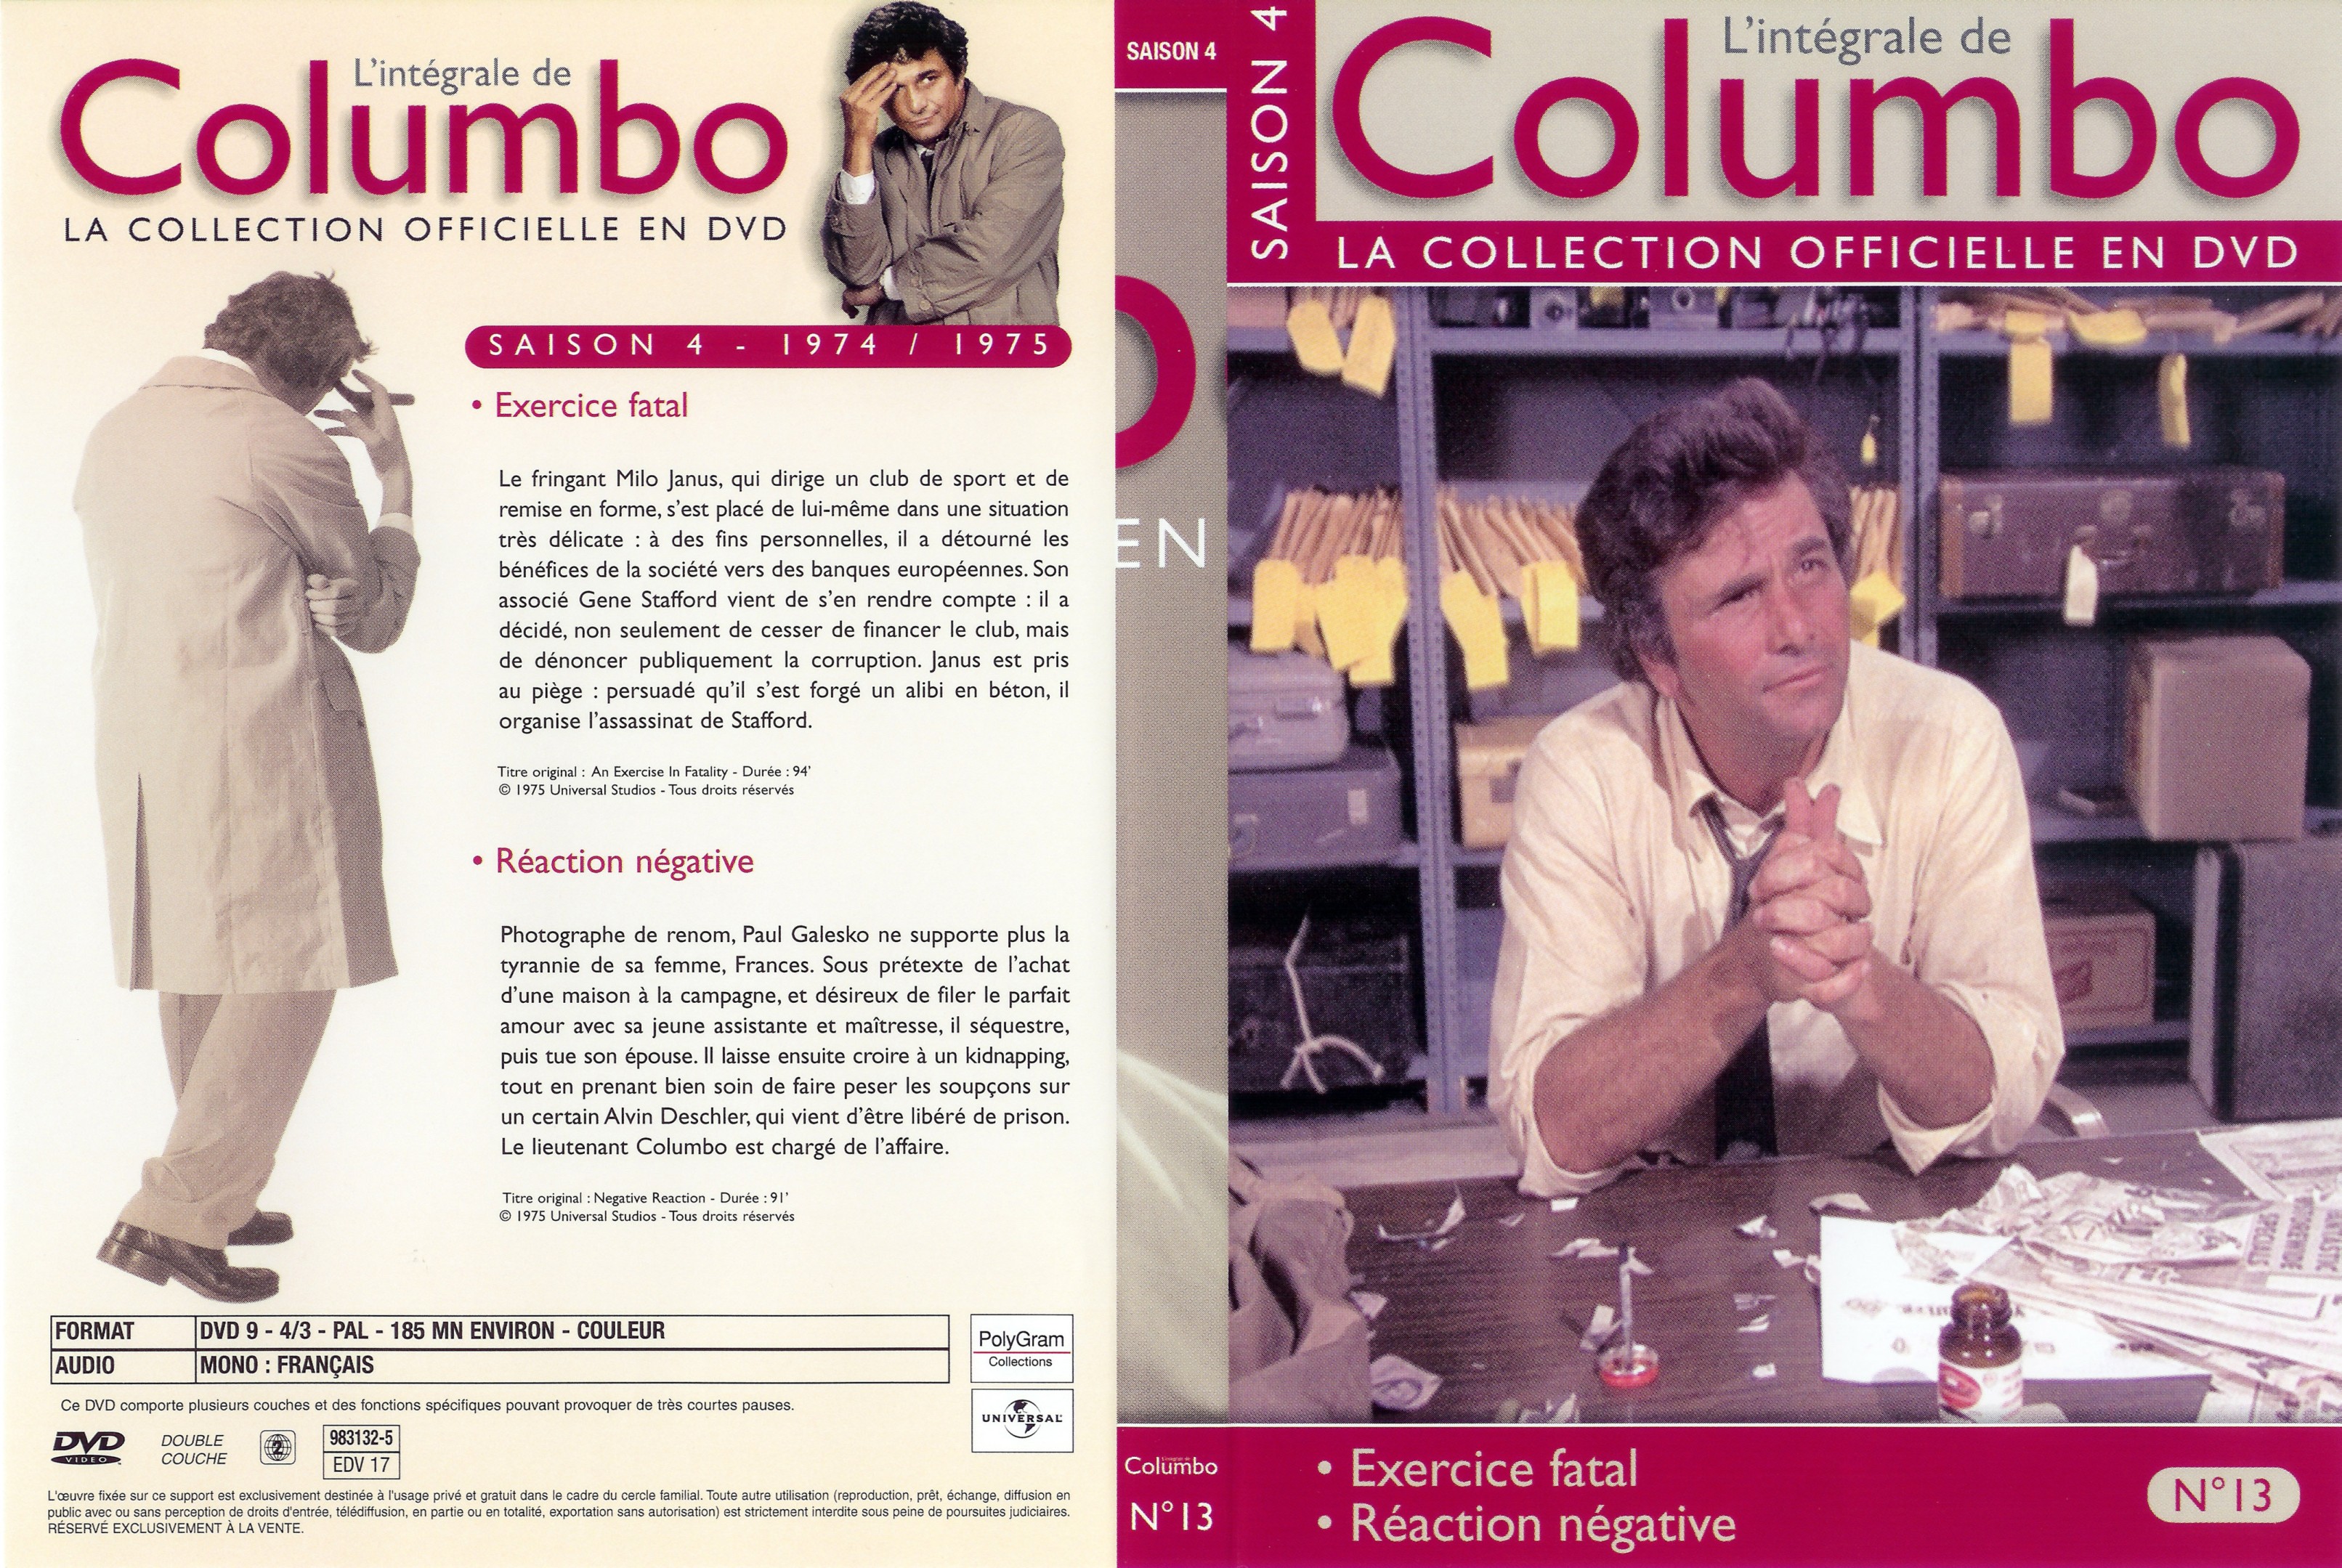 Jaquette DVD Columbo saison 4 vol 13